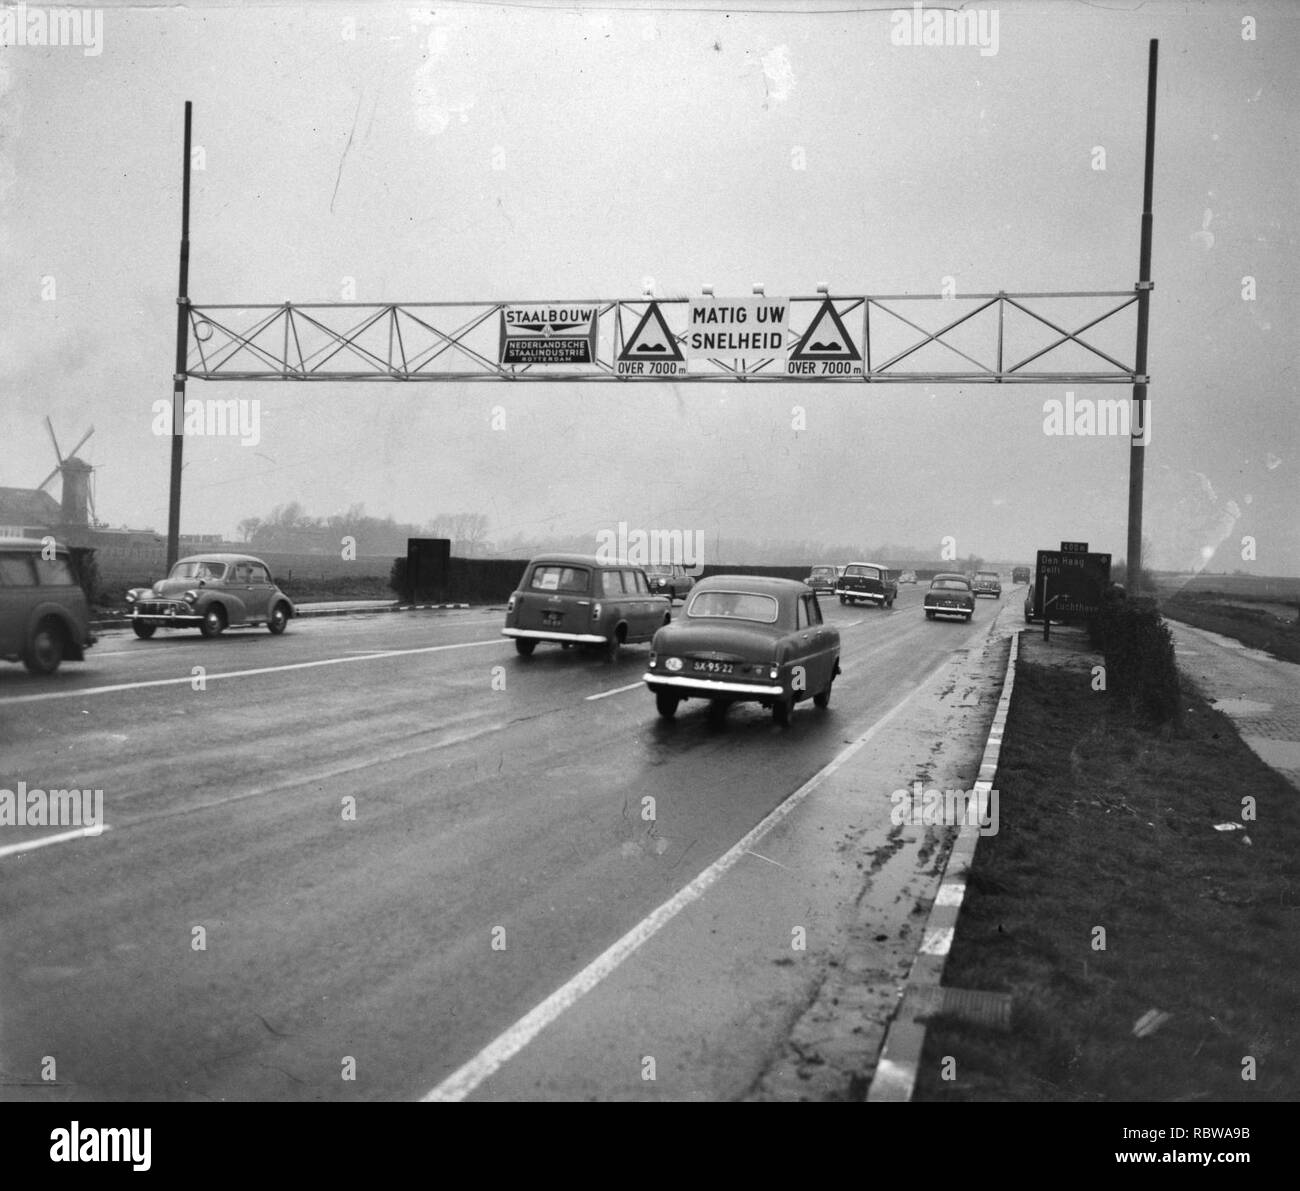 Aanbrengen van waarschuwingsborden op de weg Den Haag Rotterdam, Bestanddeelnr 910-0386. Stock Photo